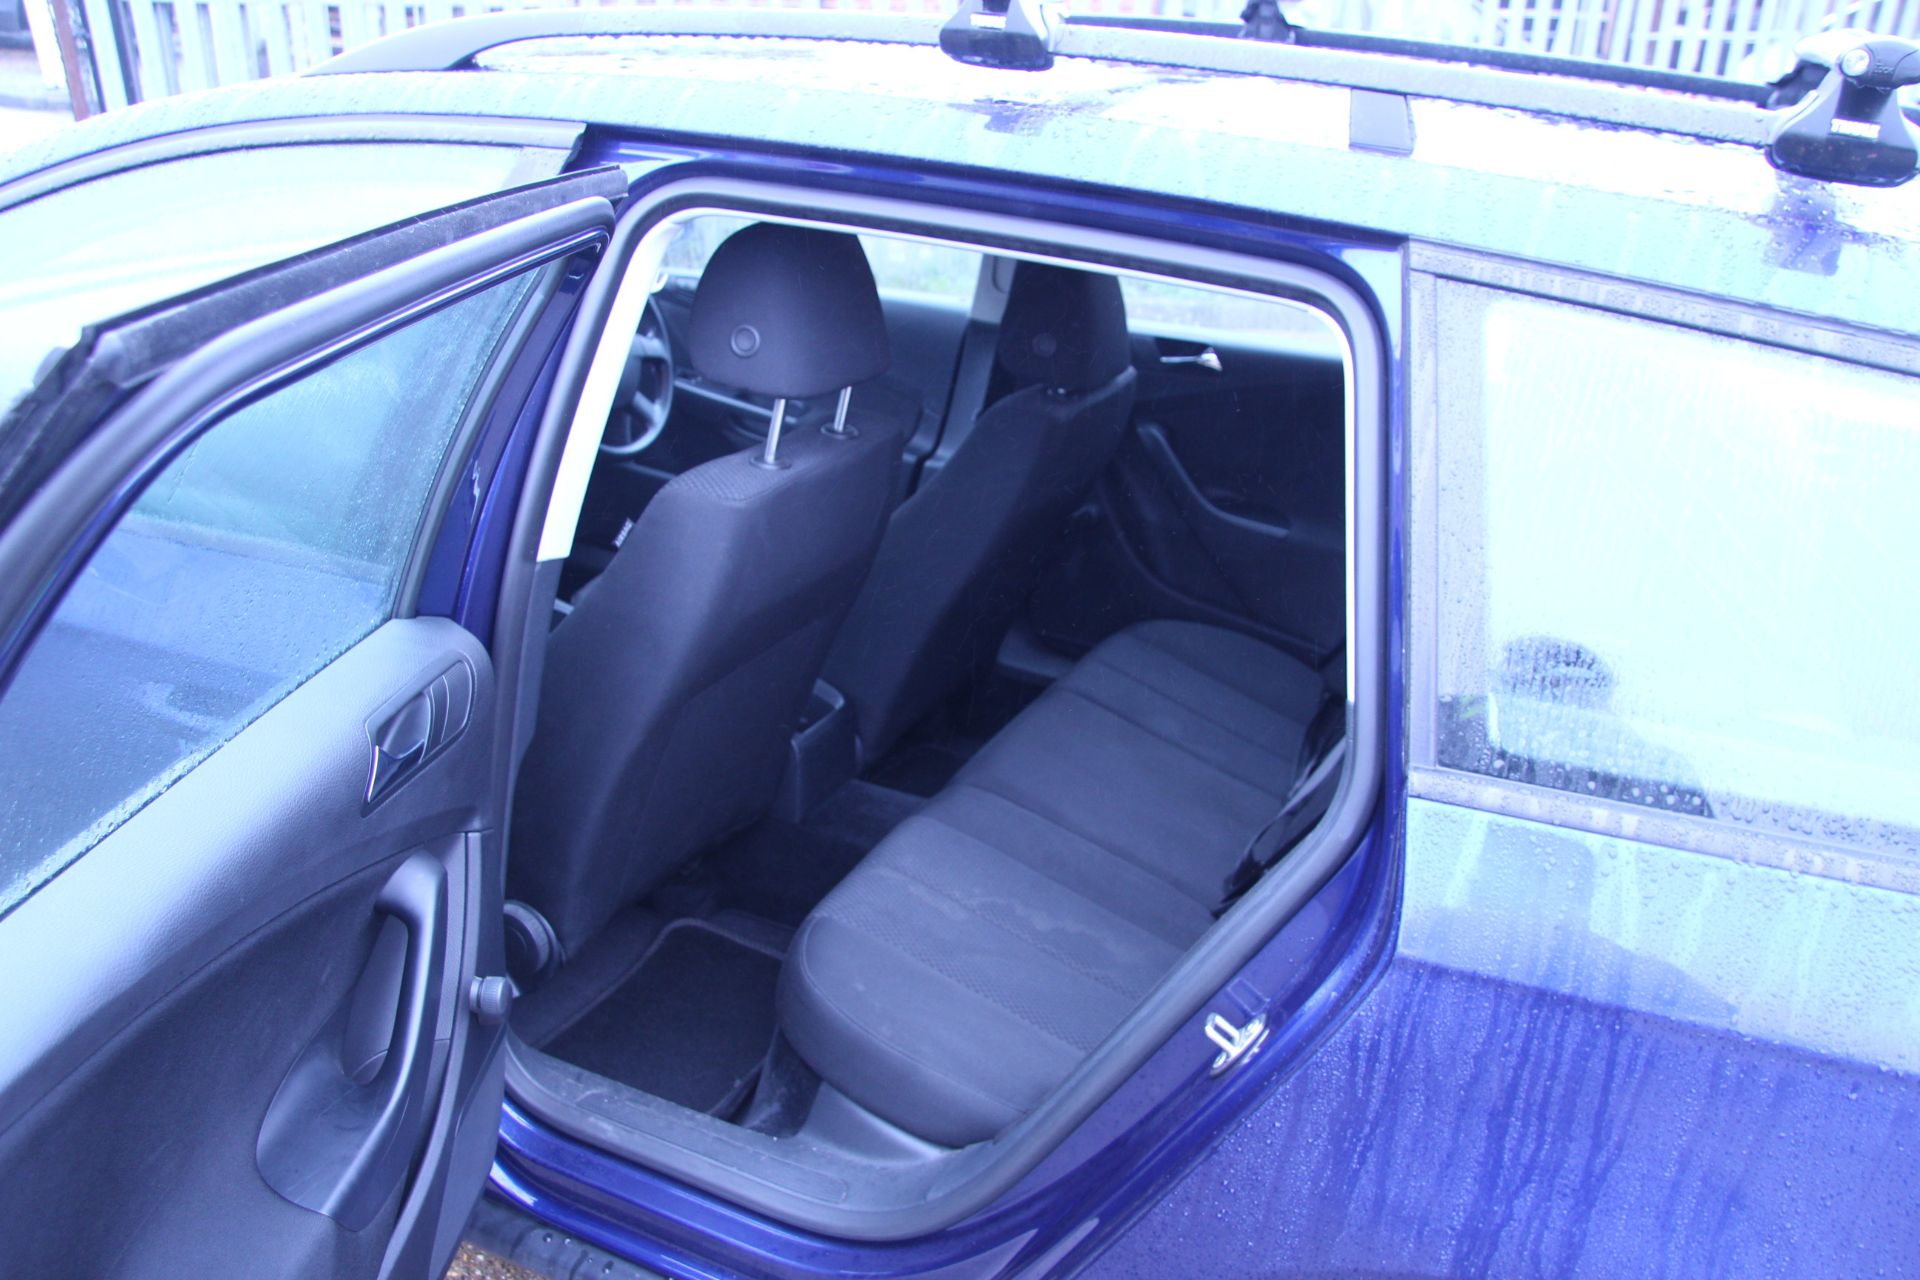 Blue VW Passat Estate 5 Door - 2.0 S TDI - One Key - Automatic DSG - 66414 Miles - MOT Till June - Image 6 of 9